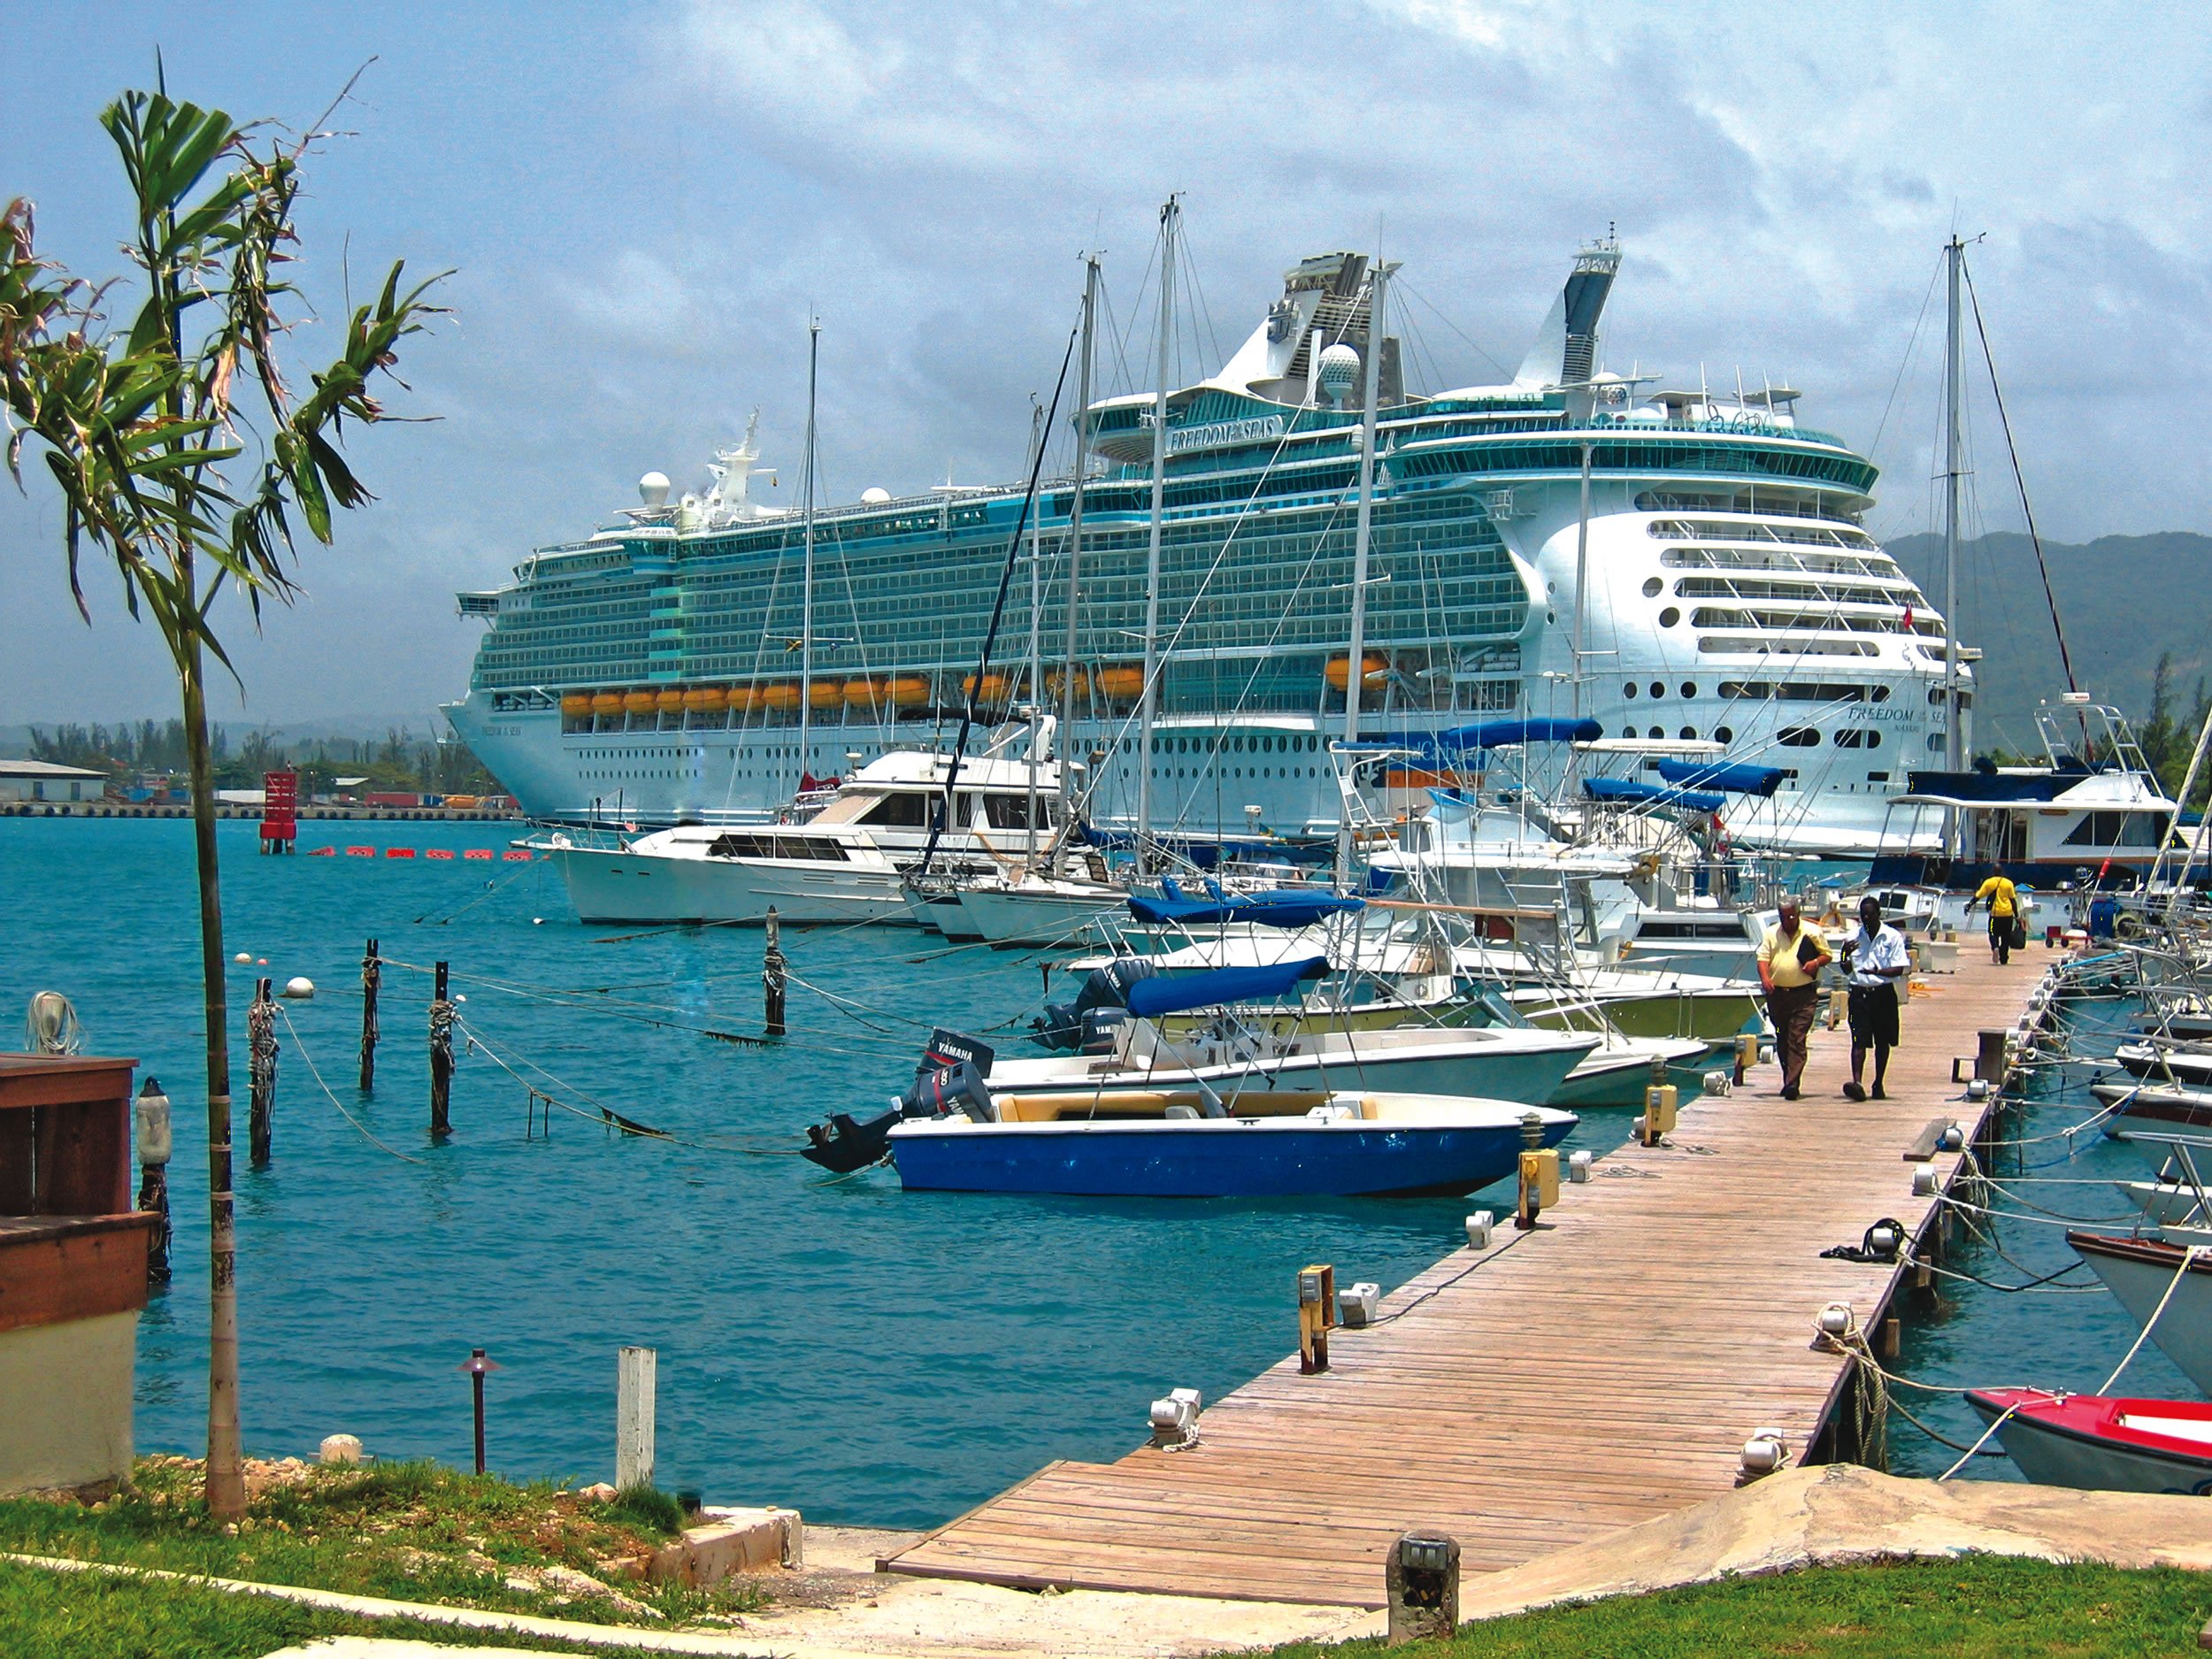 boat cruise to jamaica